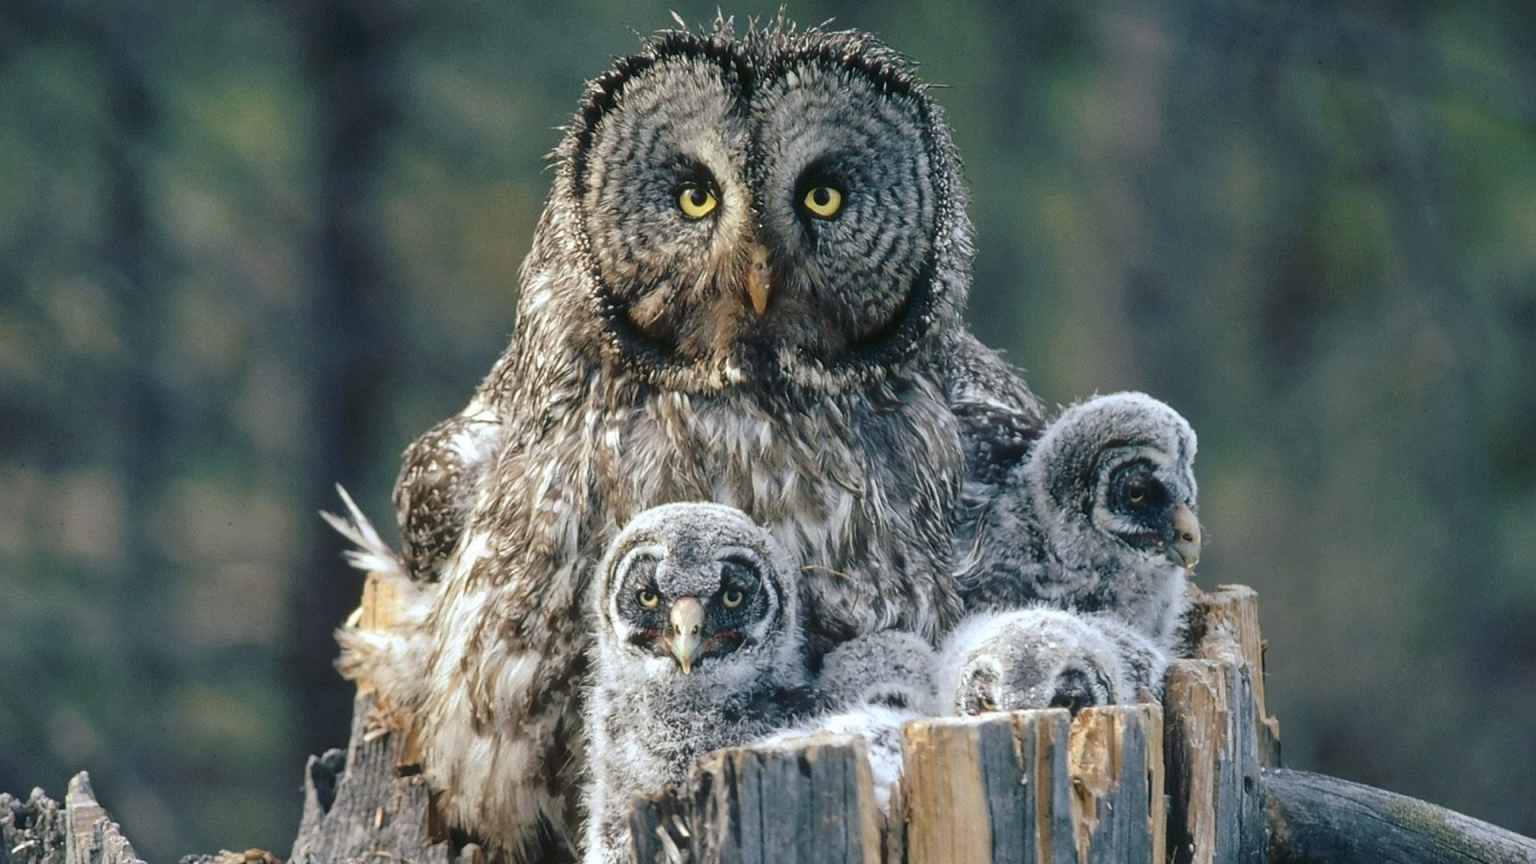 Owl Family Background for 1536 x 864 HDTV resolution